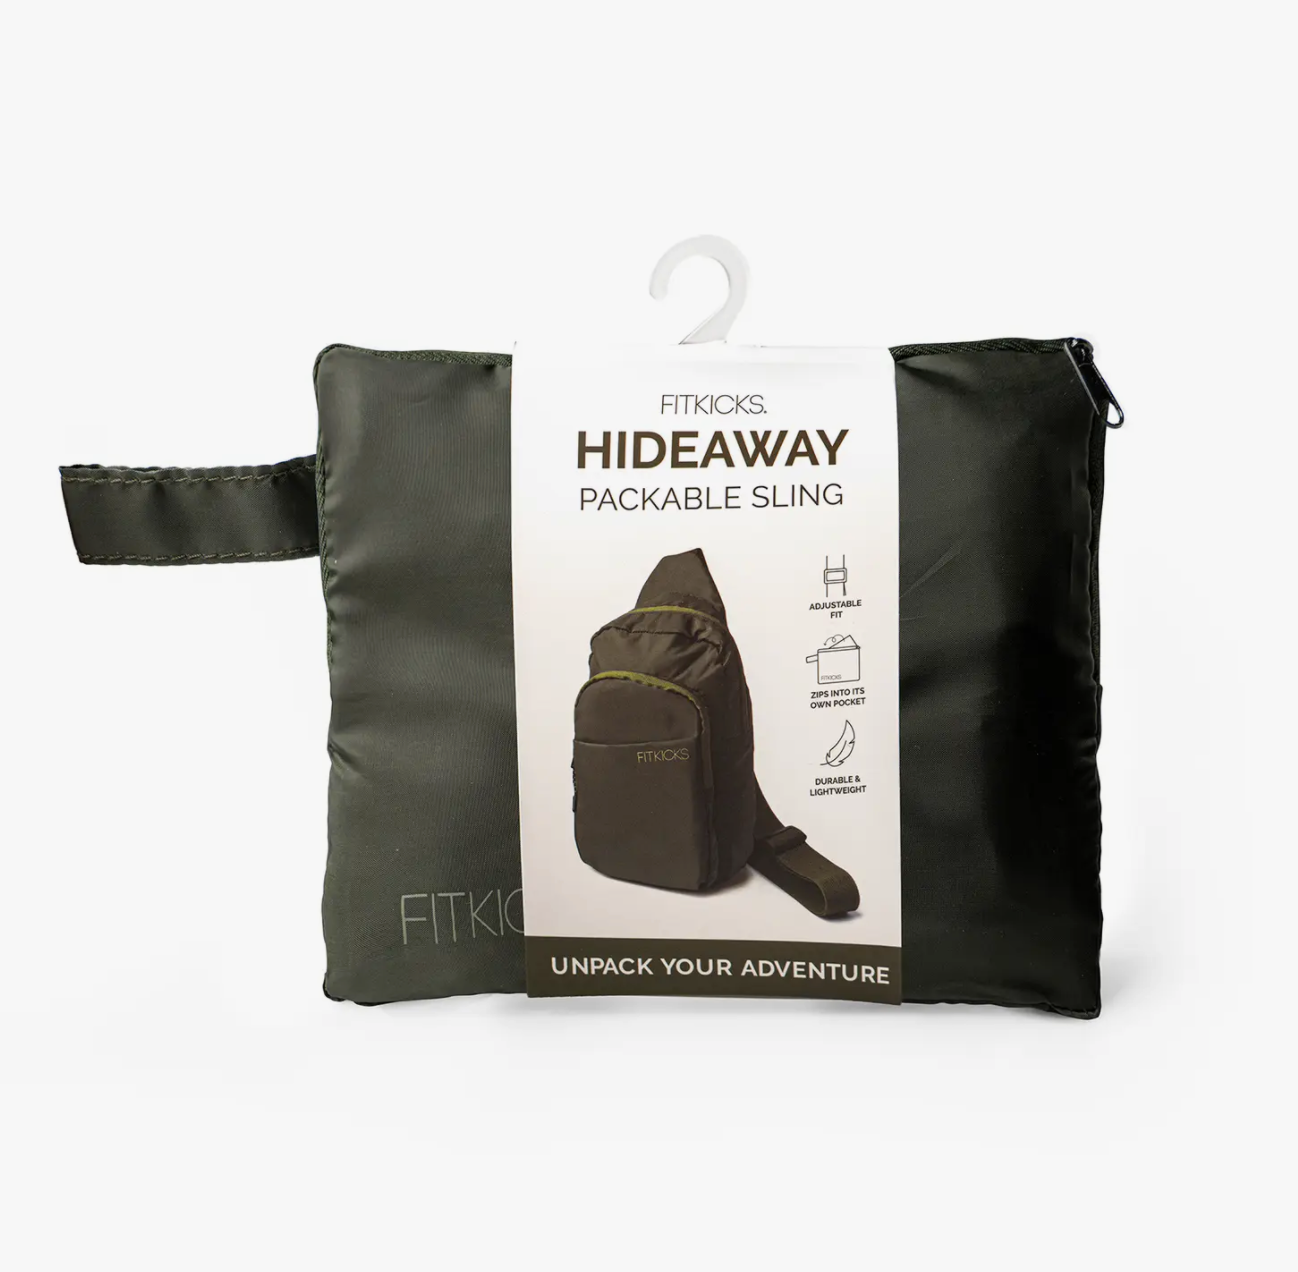 Fitkicks Hideaway Packable Sling